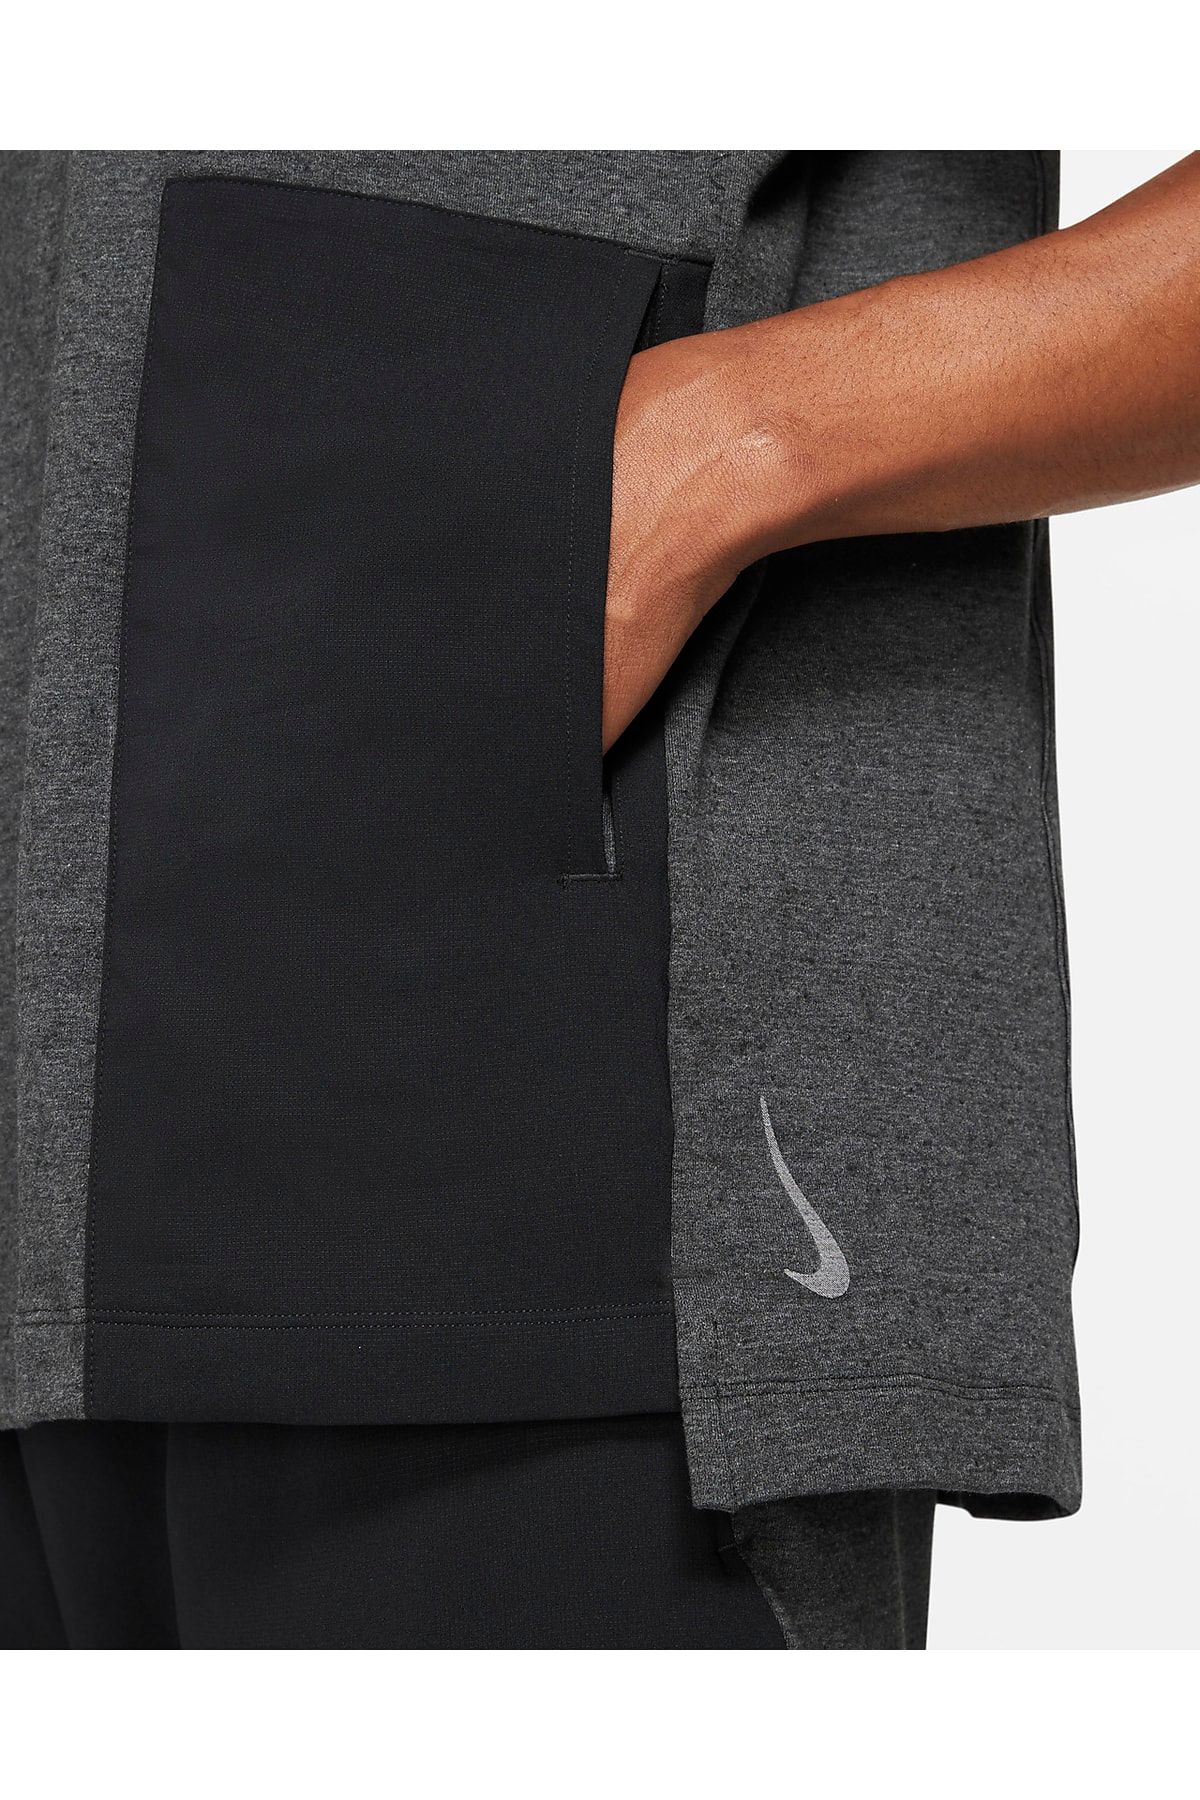 Nike Yoga Dri-FIT Men's Short-Sleeve Top.